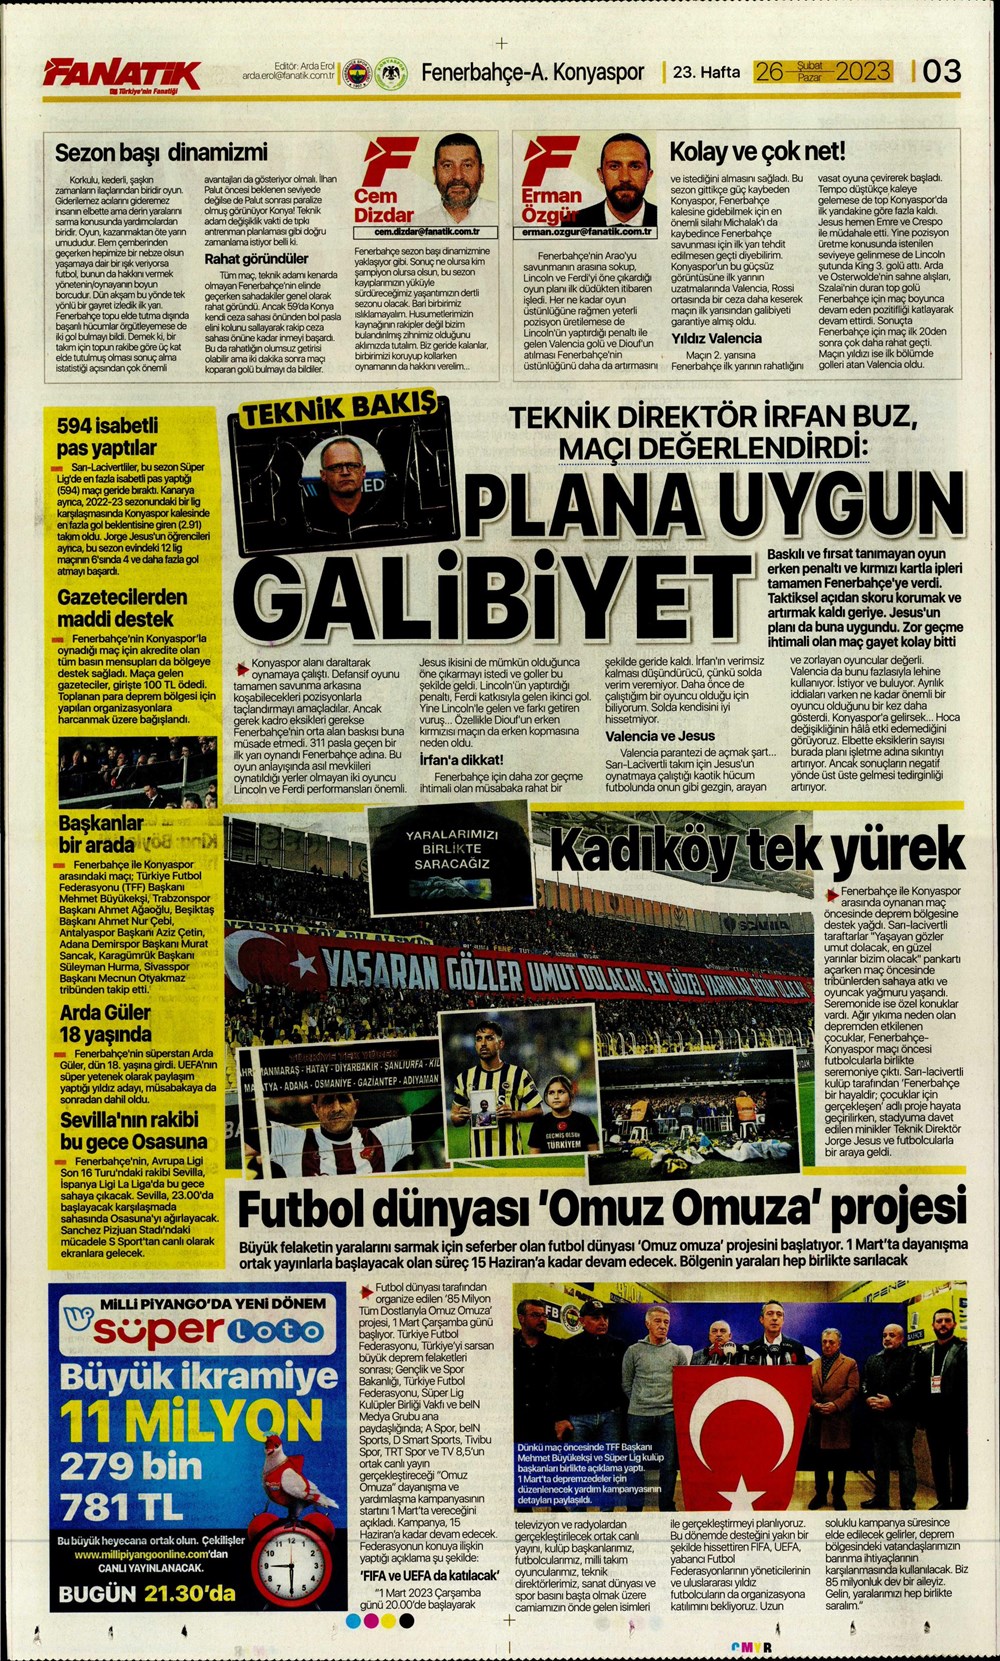 "Valenci'ağa' böyle istedi" - Sporun manşetleri  - 3. Foto